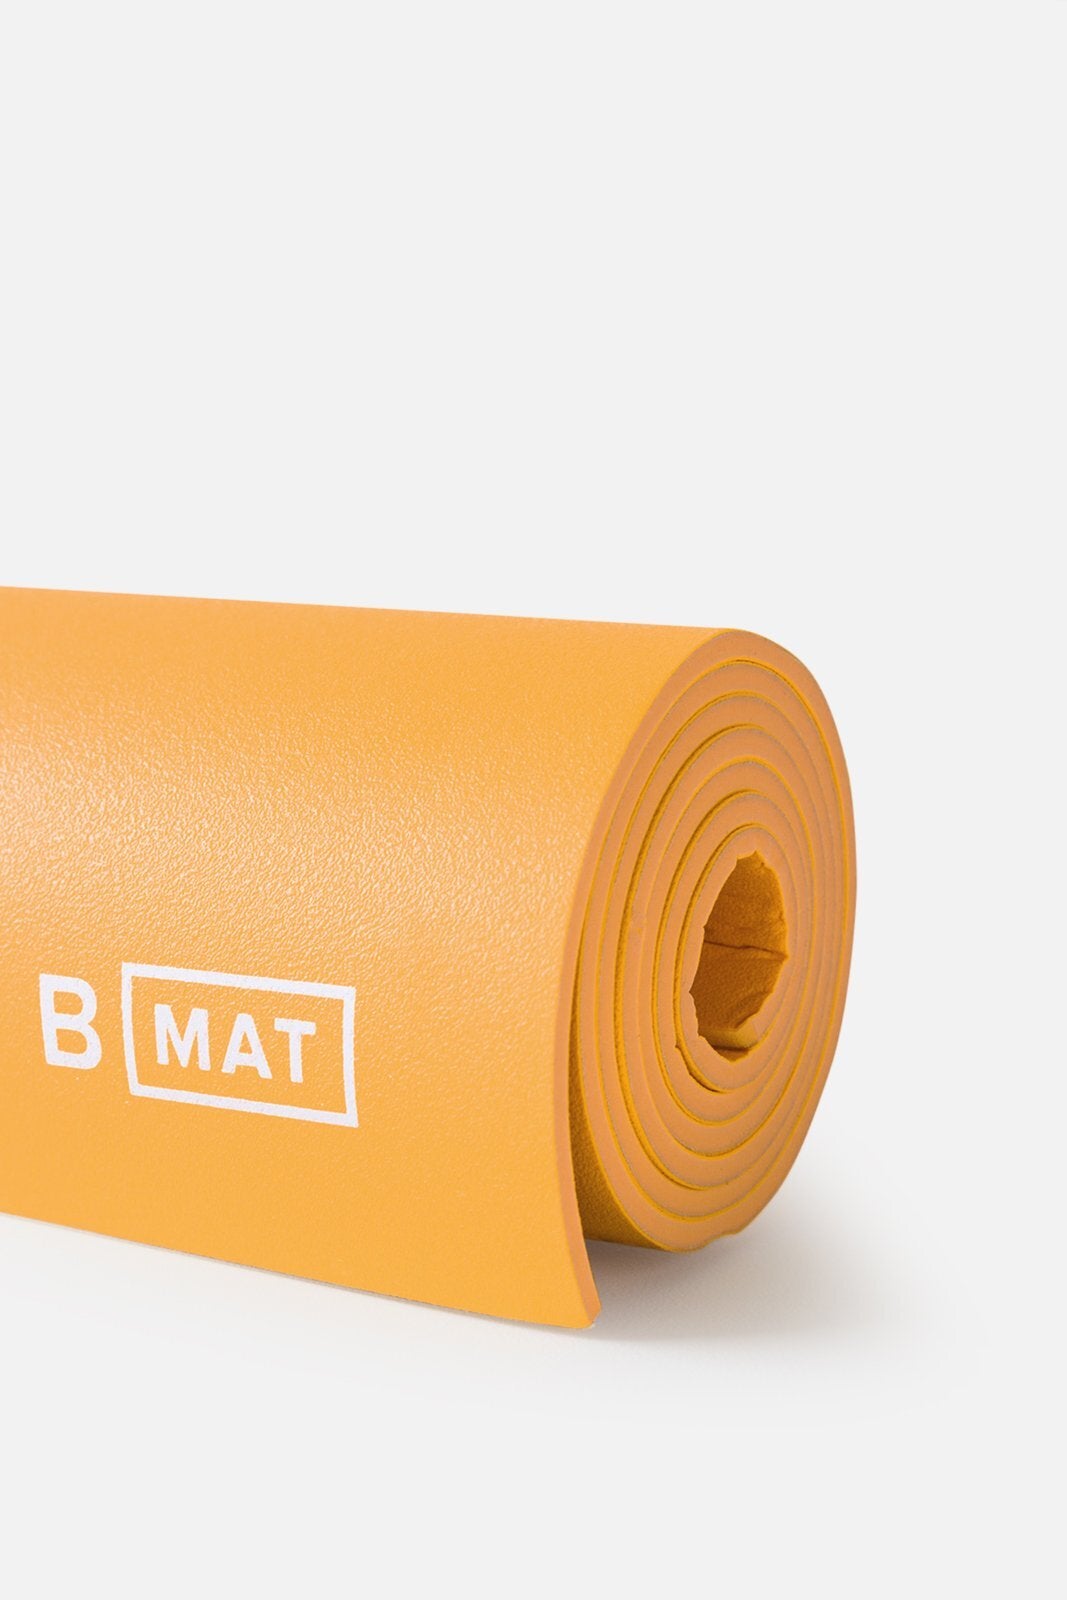 Yoga mat b mat strong - Charcoal, B MAT Strong, B Yoga Mats, YOGA MATS